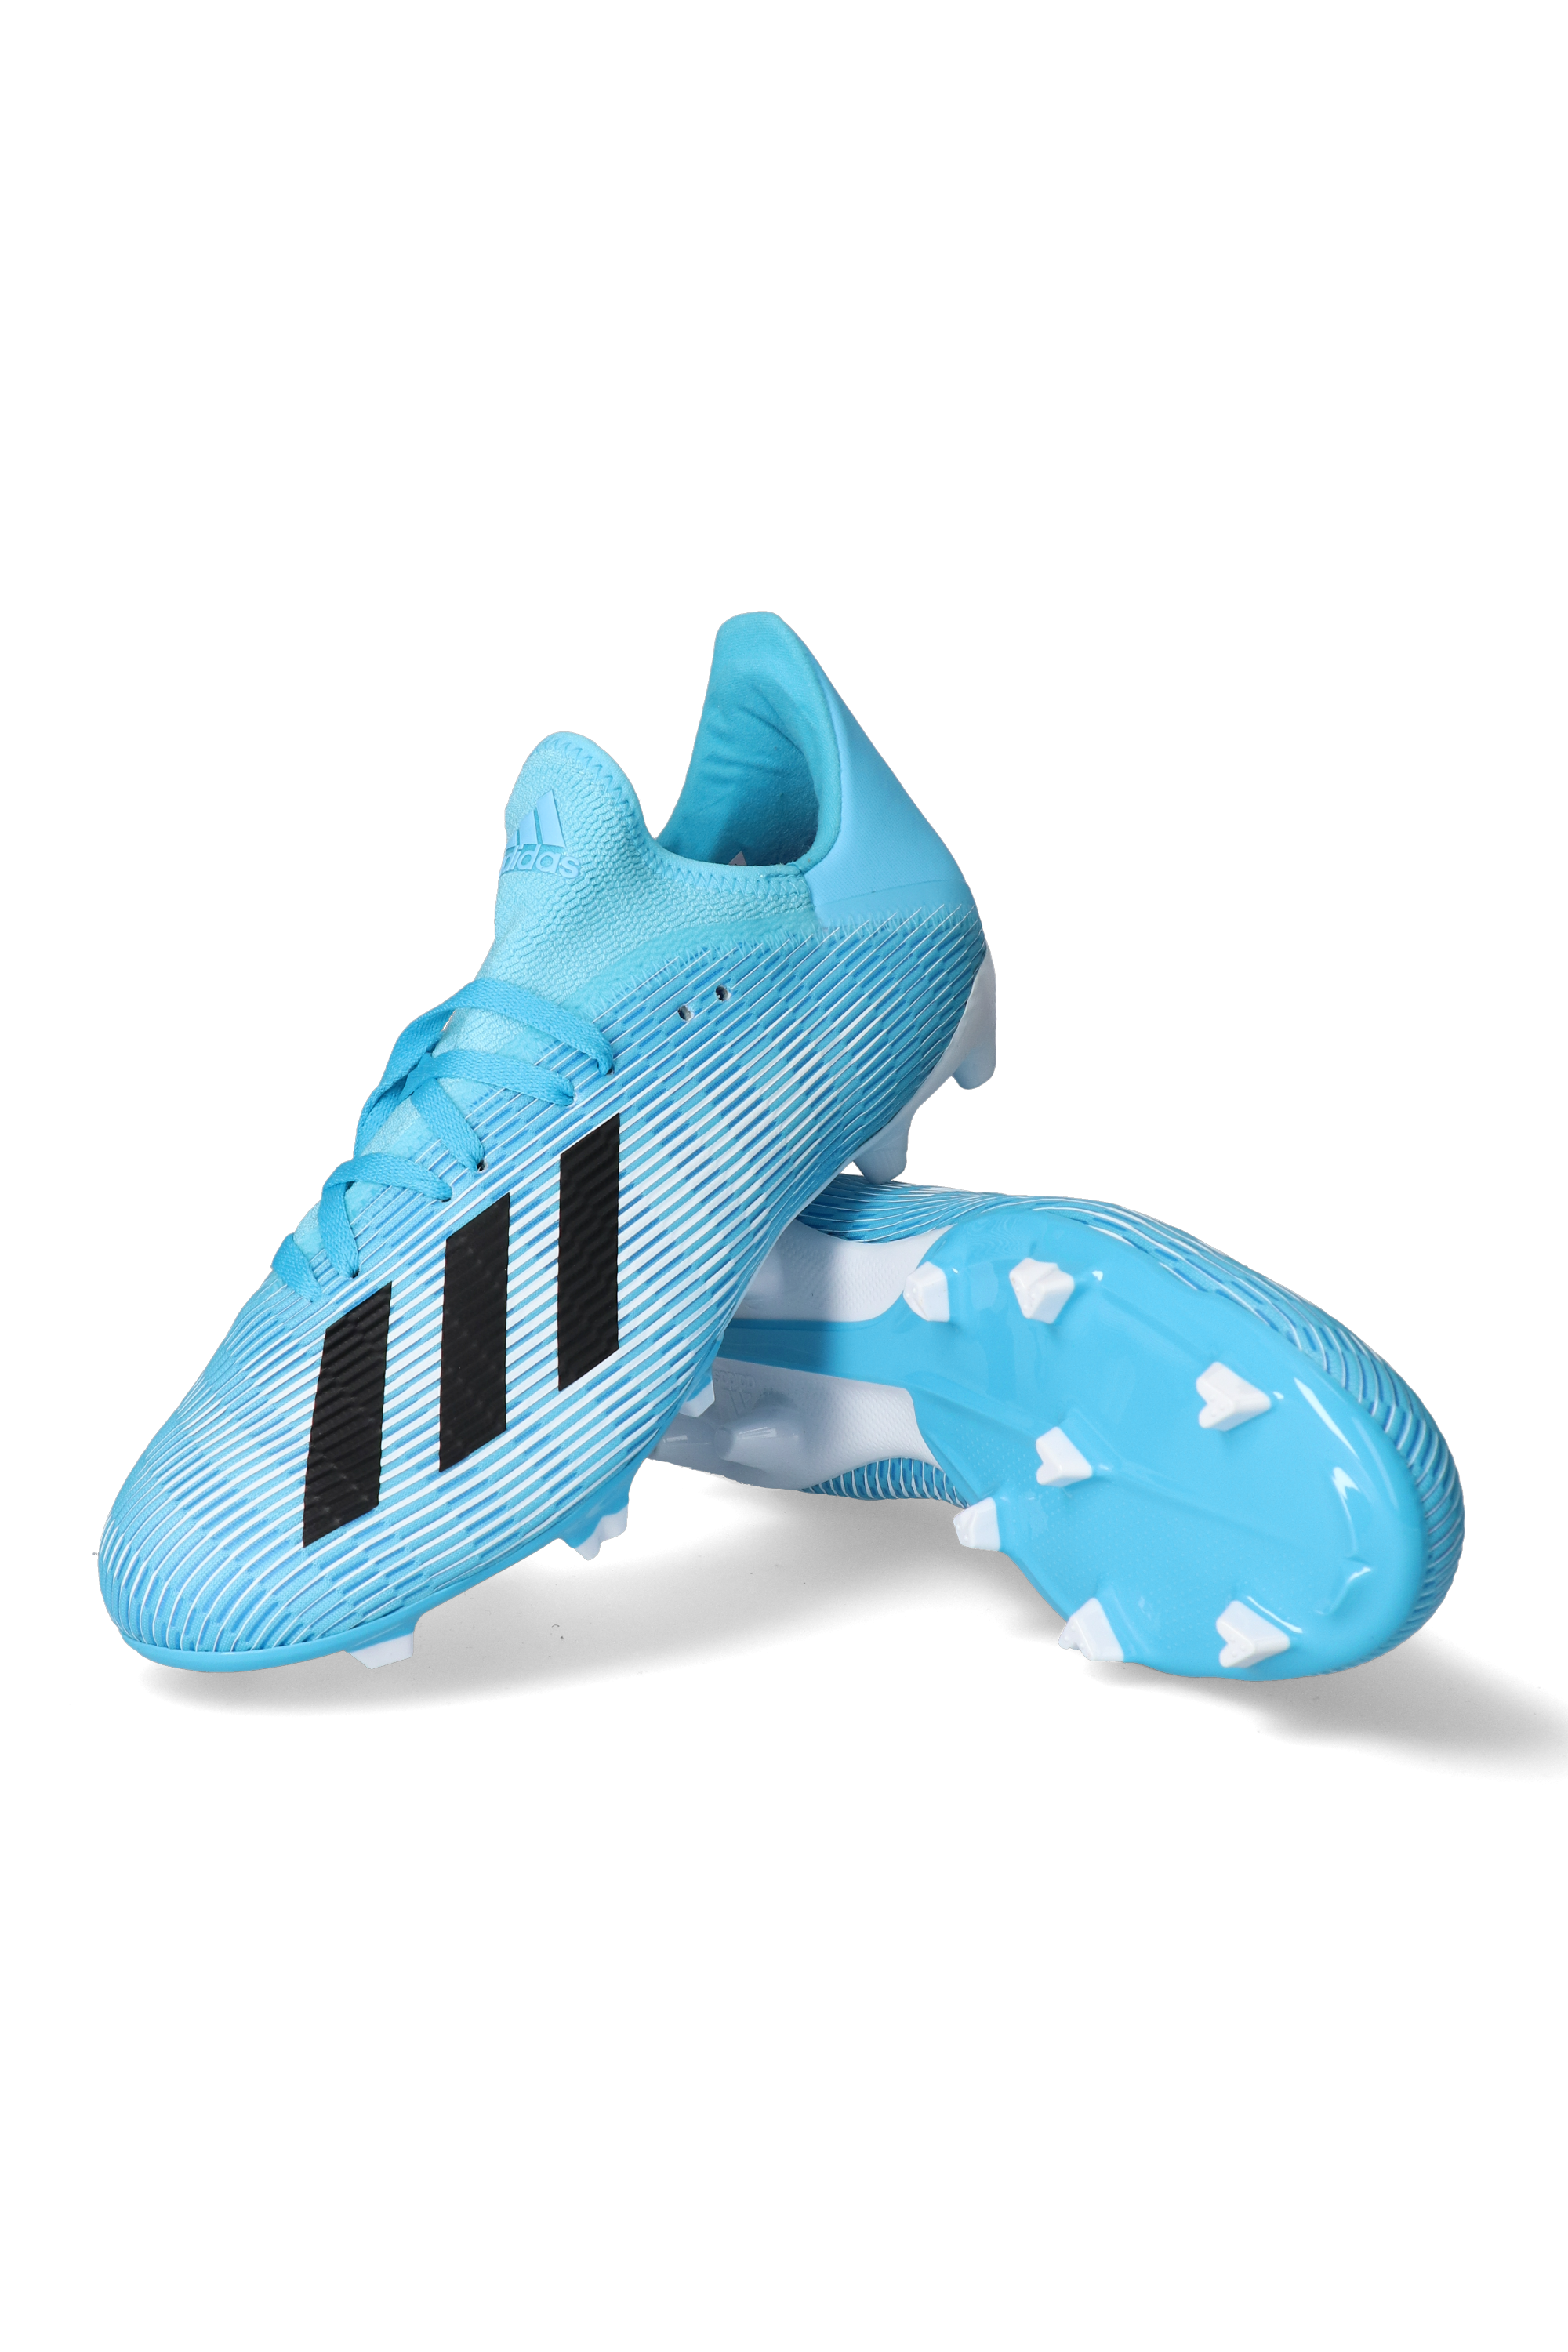 adidas X 19.3 FG | R-GOL.com - Football boots \u0026 equipment